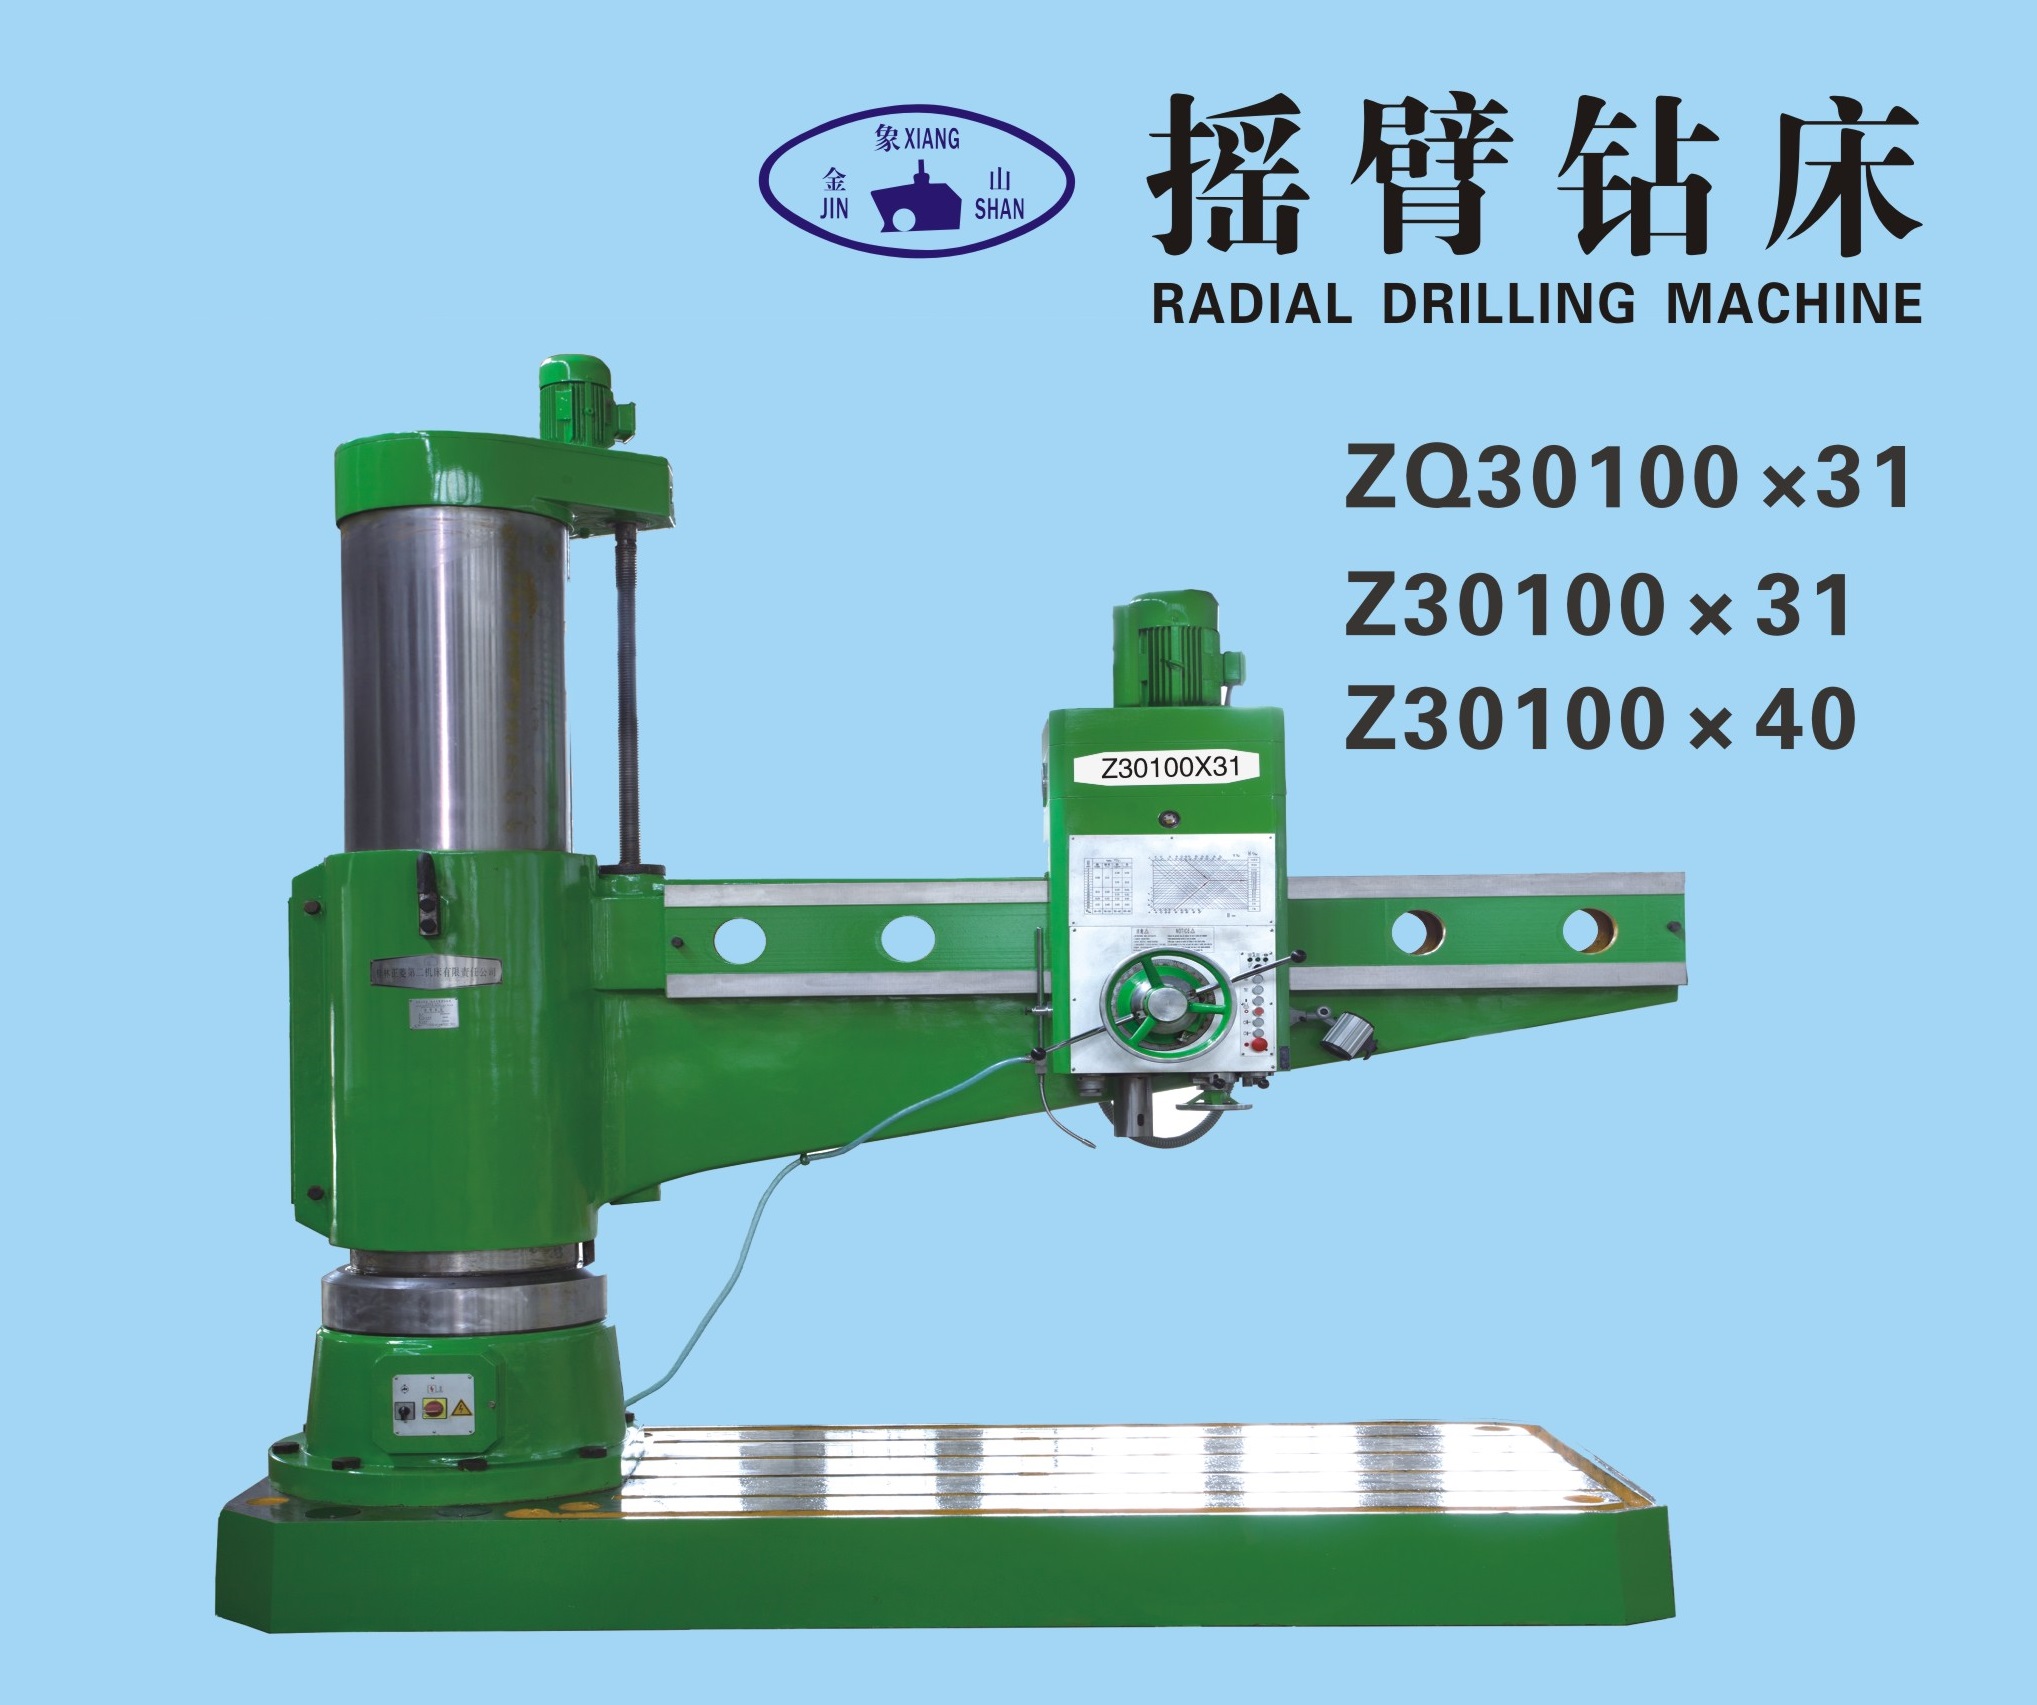 100 mm Radial Drilling Machine Z30100